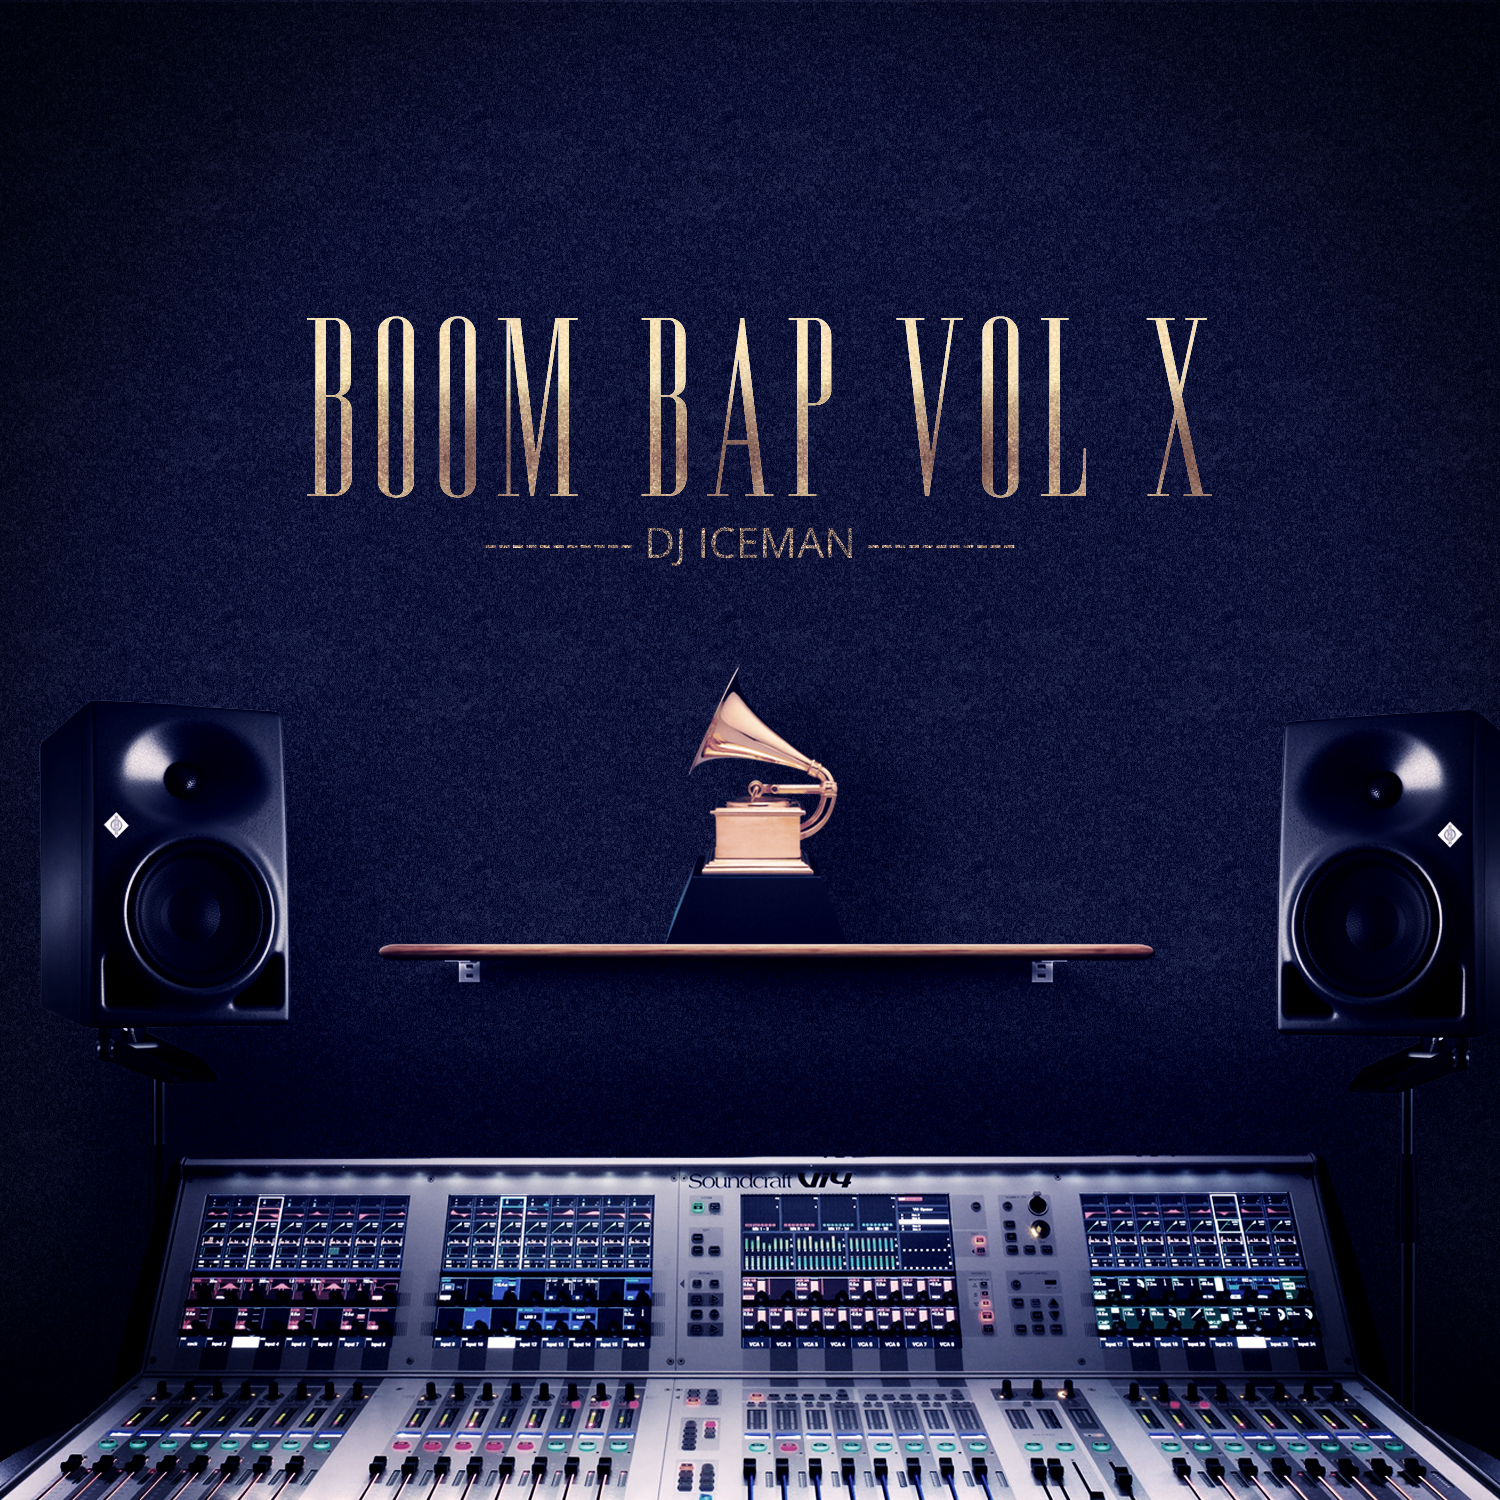 Dj Iceman (Big Boss Beatz)- Boom Bap Vol 10